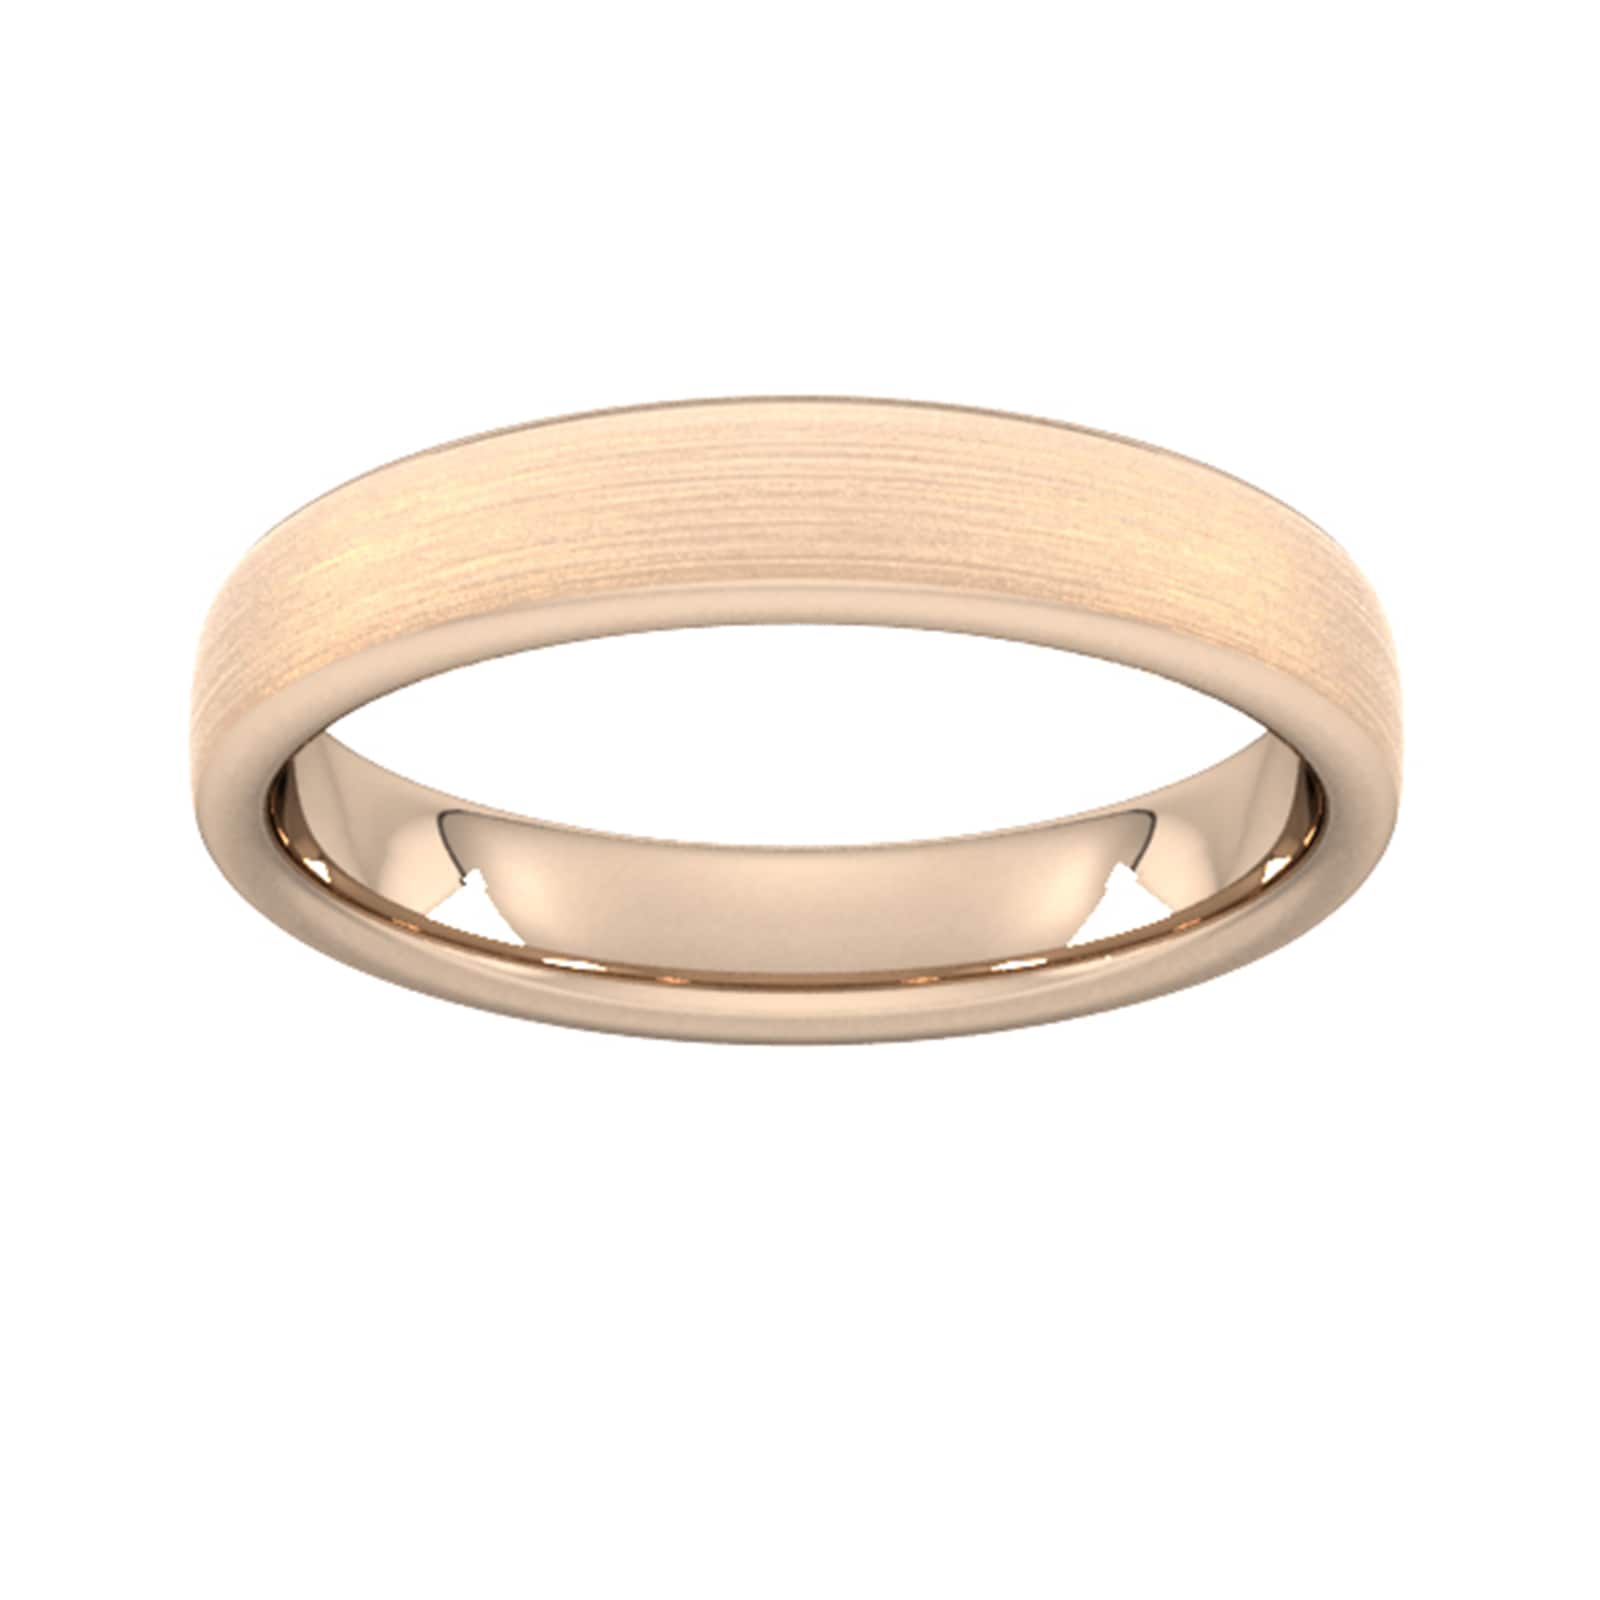 4mm Slight Court Heavy Matt Finished Wedding Ring In 18 Carat Rose Gold - Ring Size M